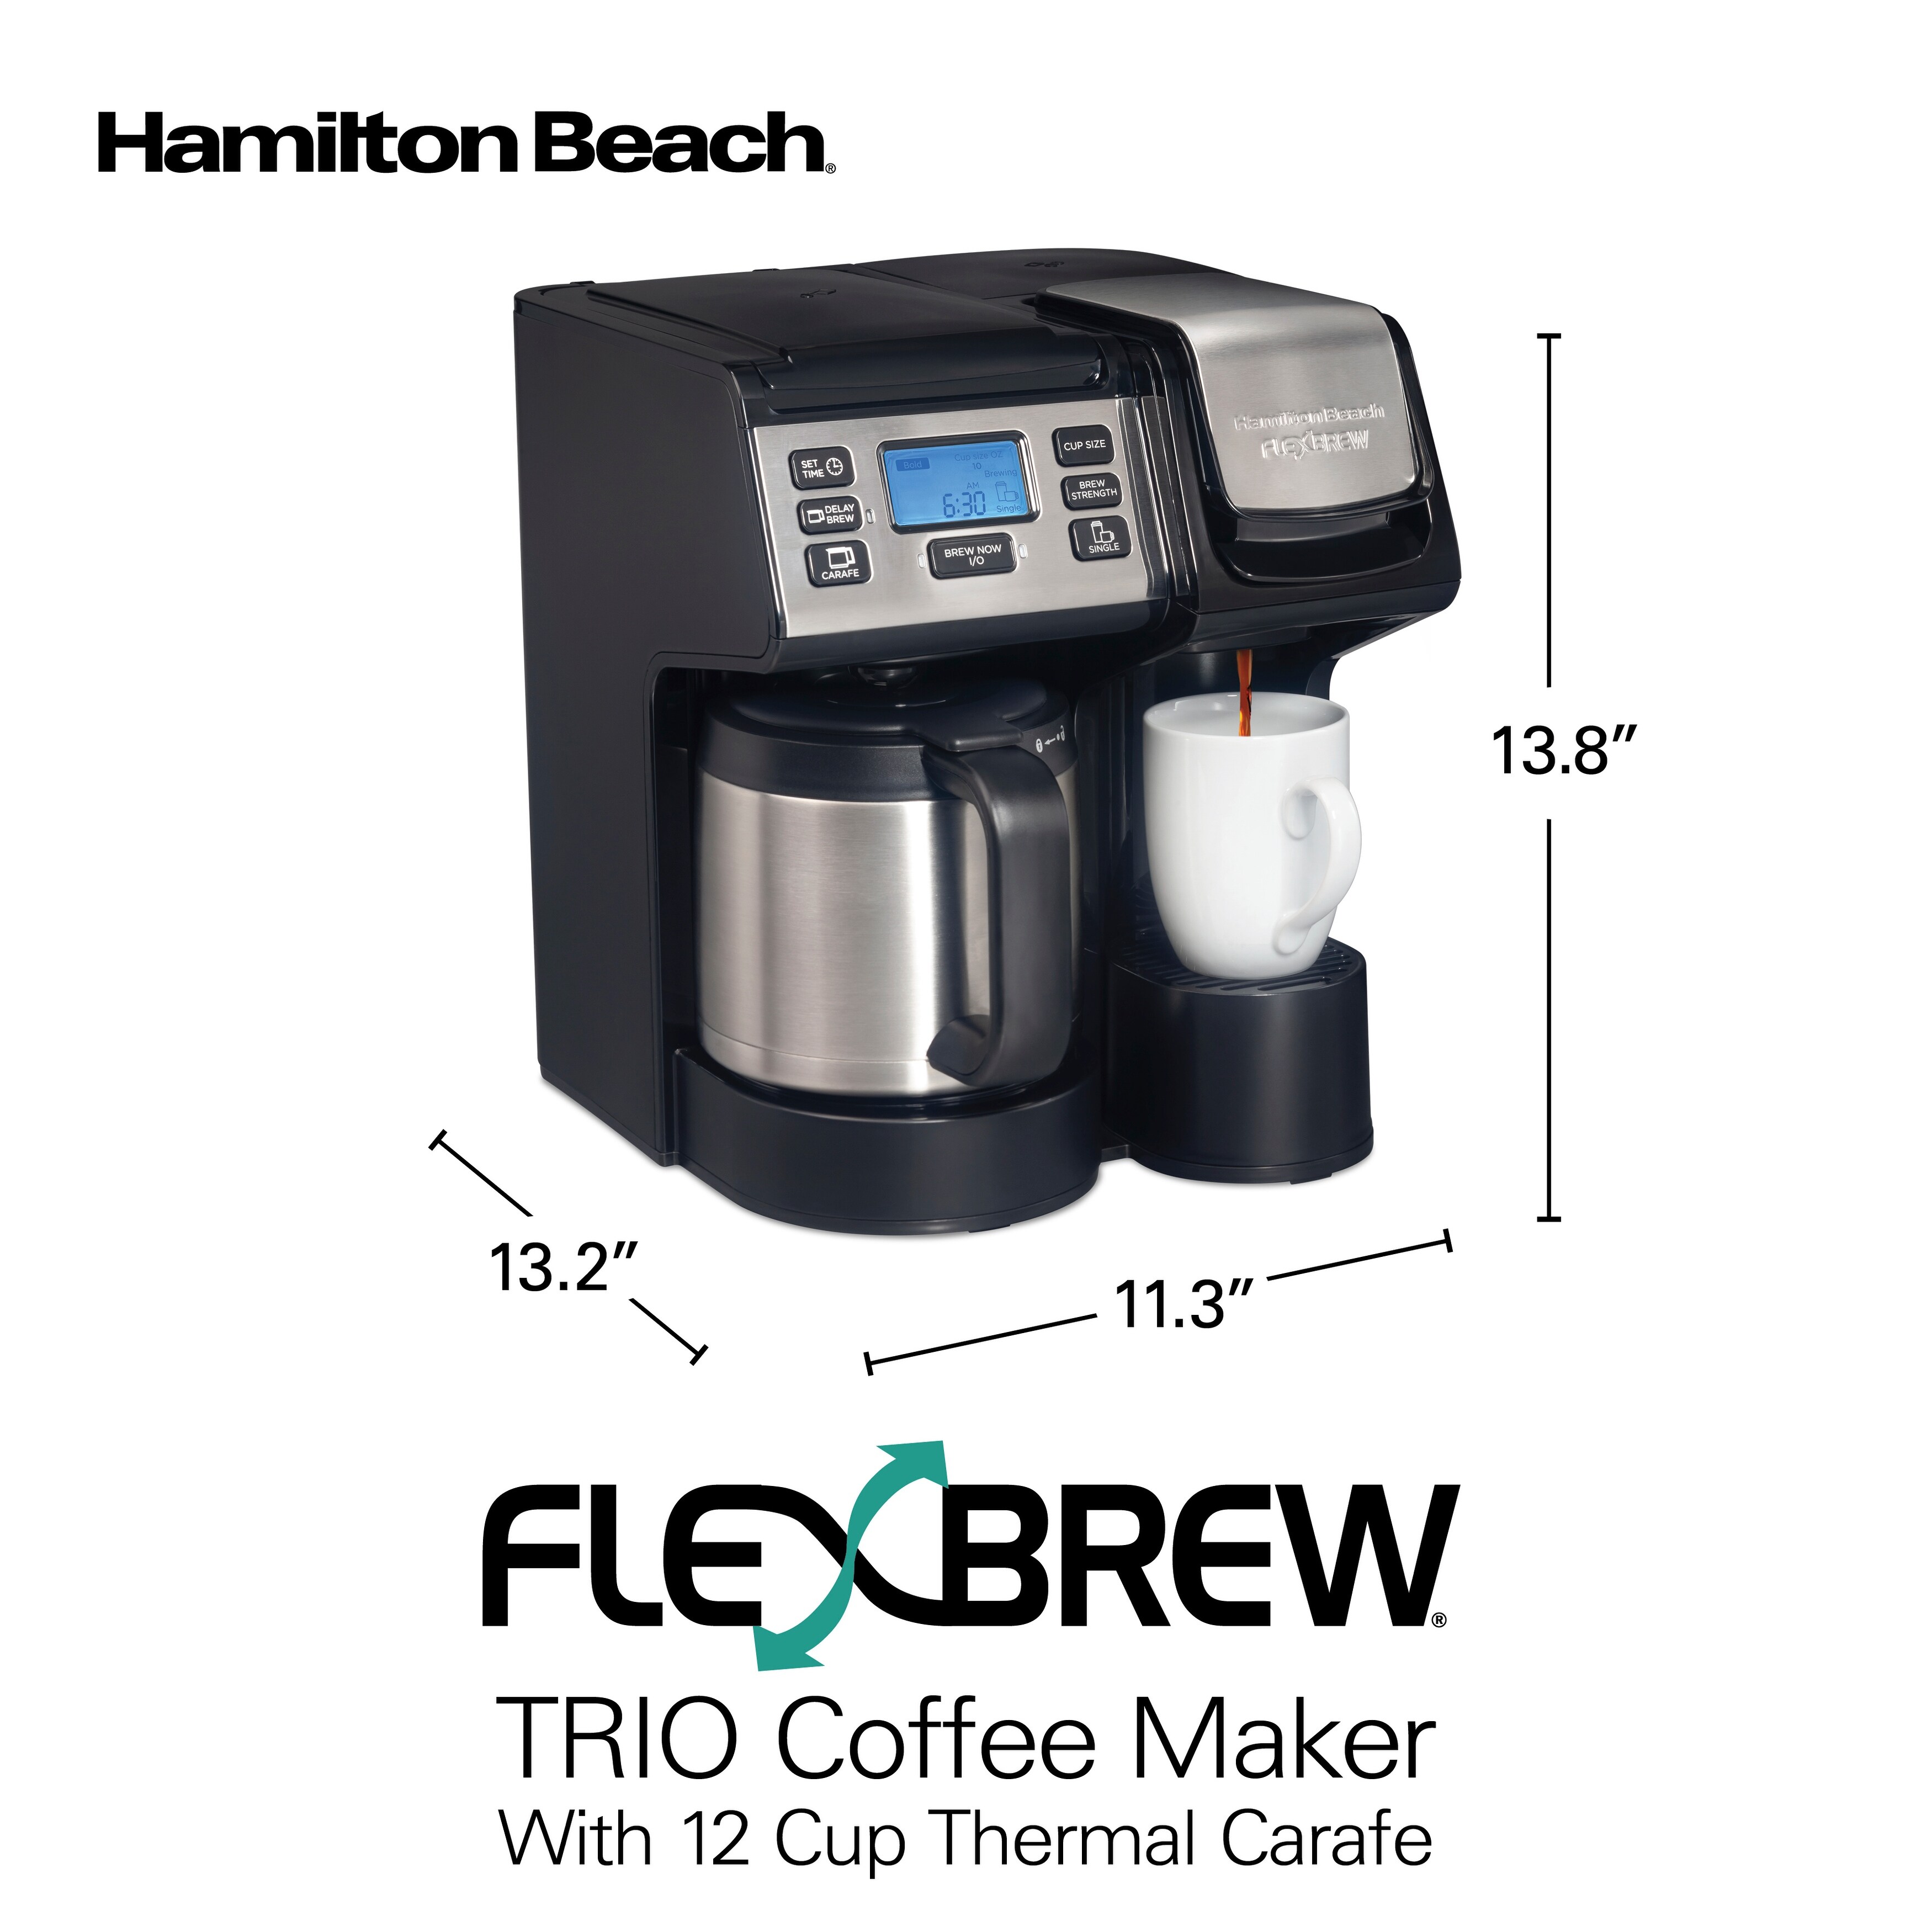 https://ak1.ostkcdn.com/images/products/is/images/direct/3778e26939d98200de0195b6e6b2bcb71cfa4d09/Hamilton-Beach-FlexBrew-Trio-Coffee-Maker-with-12-Cup-Thermal-Carafe.jpg